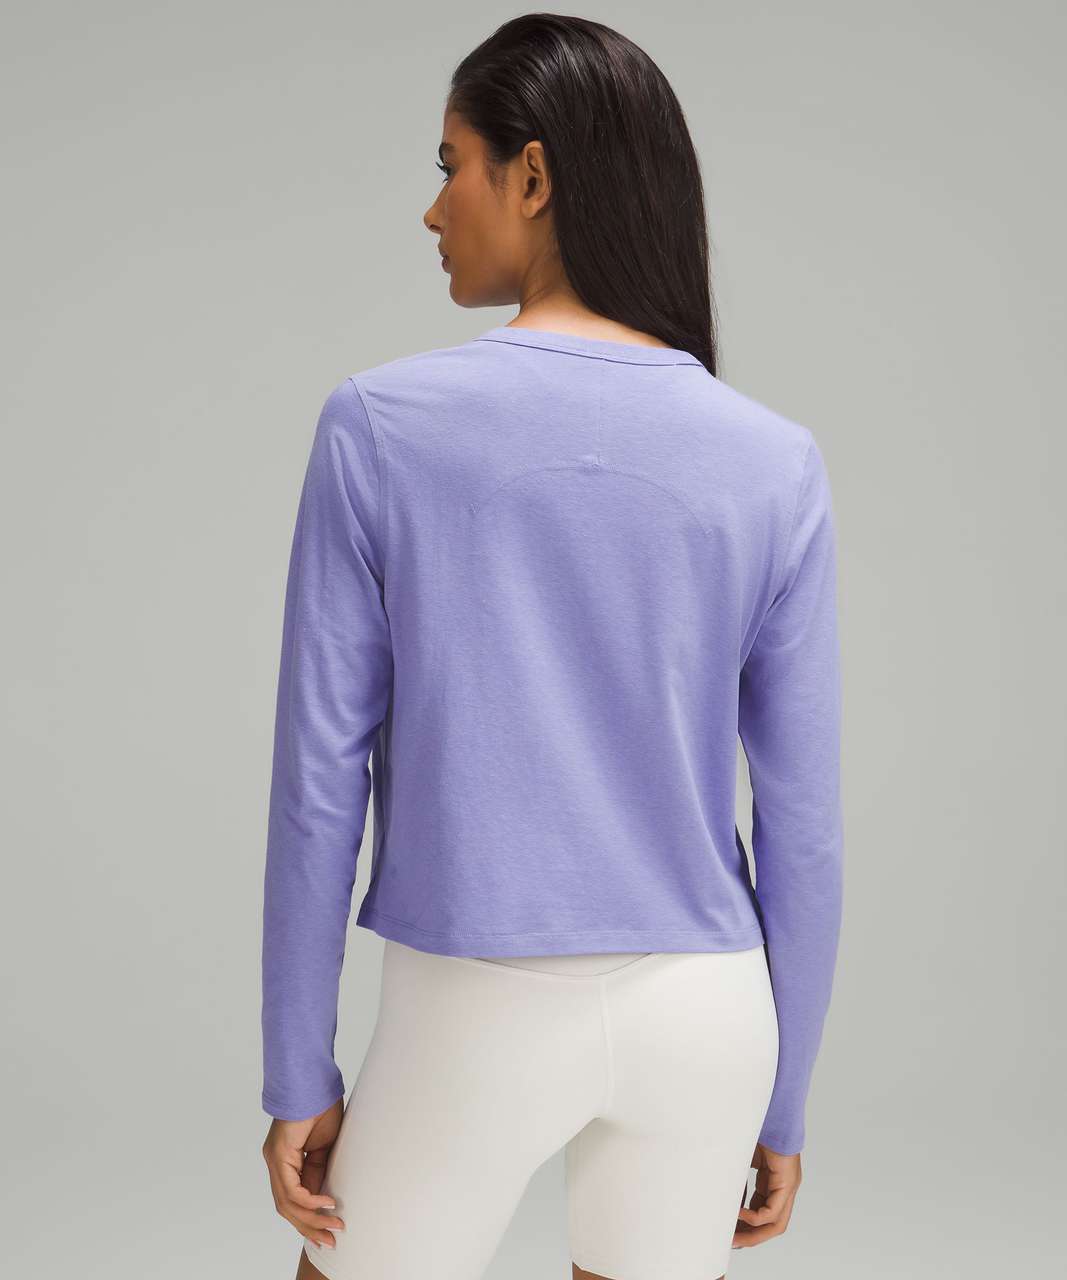 Lululemon Classic-Fit Cotton-Blend Long-Sleeve Shirt - Dark